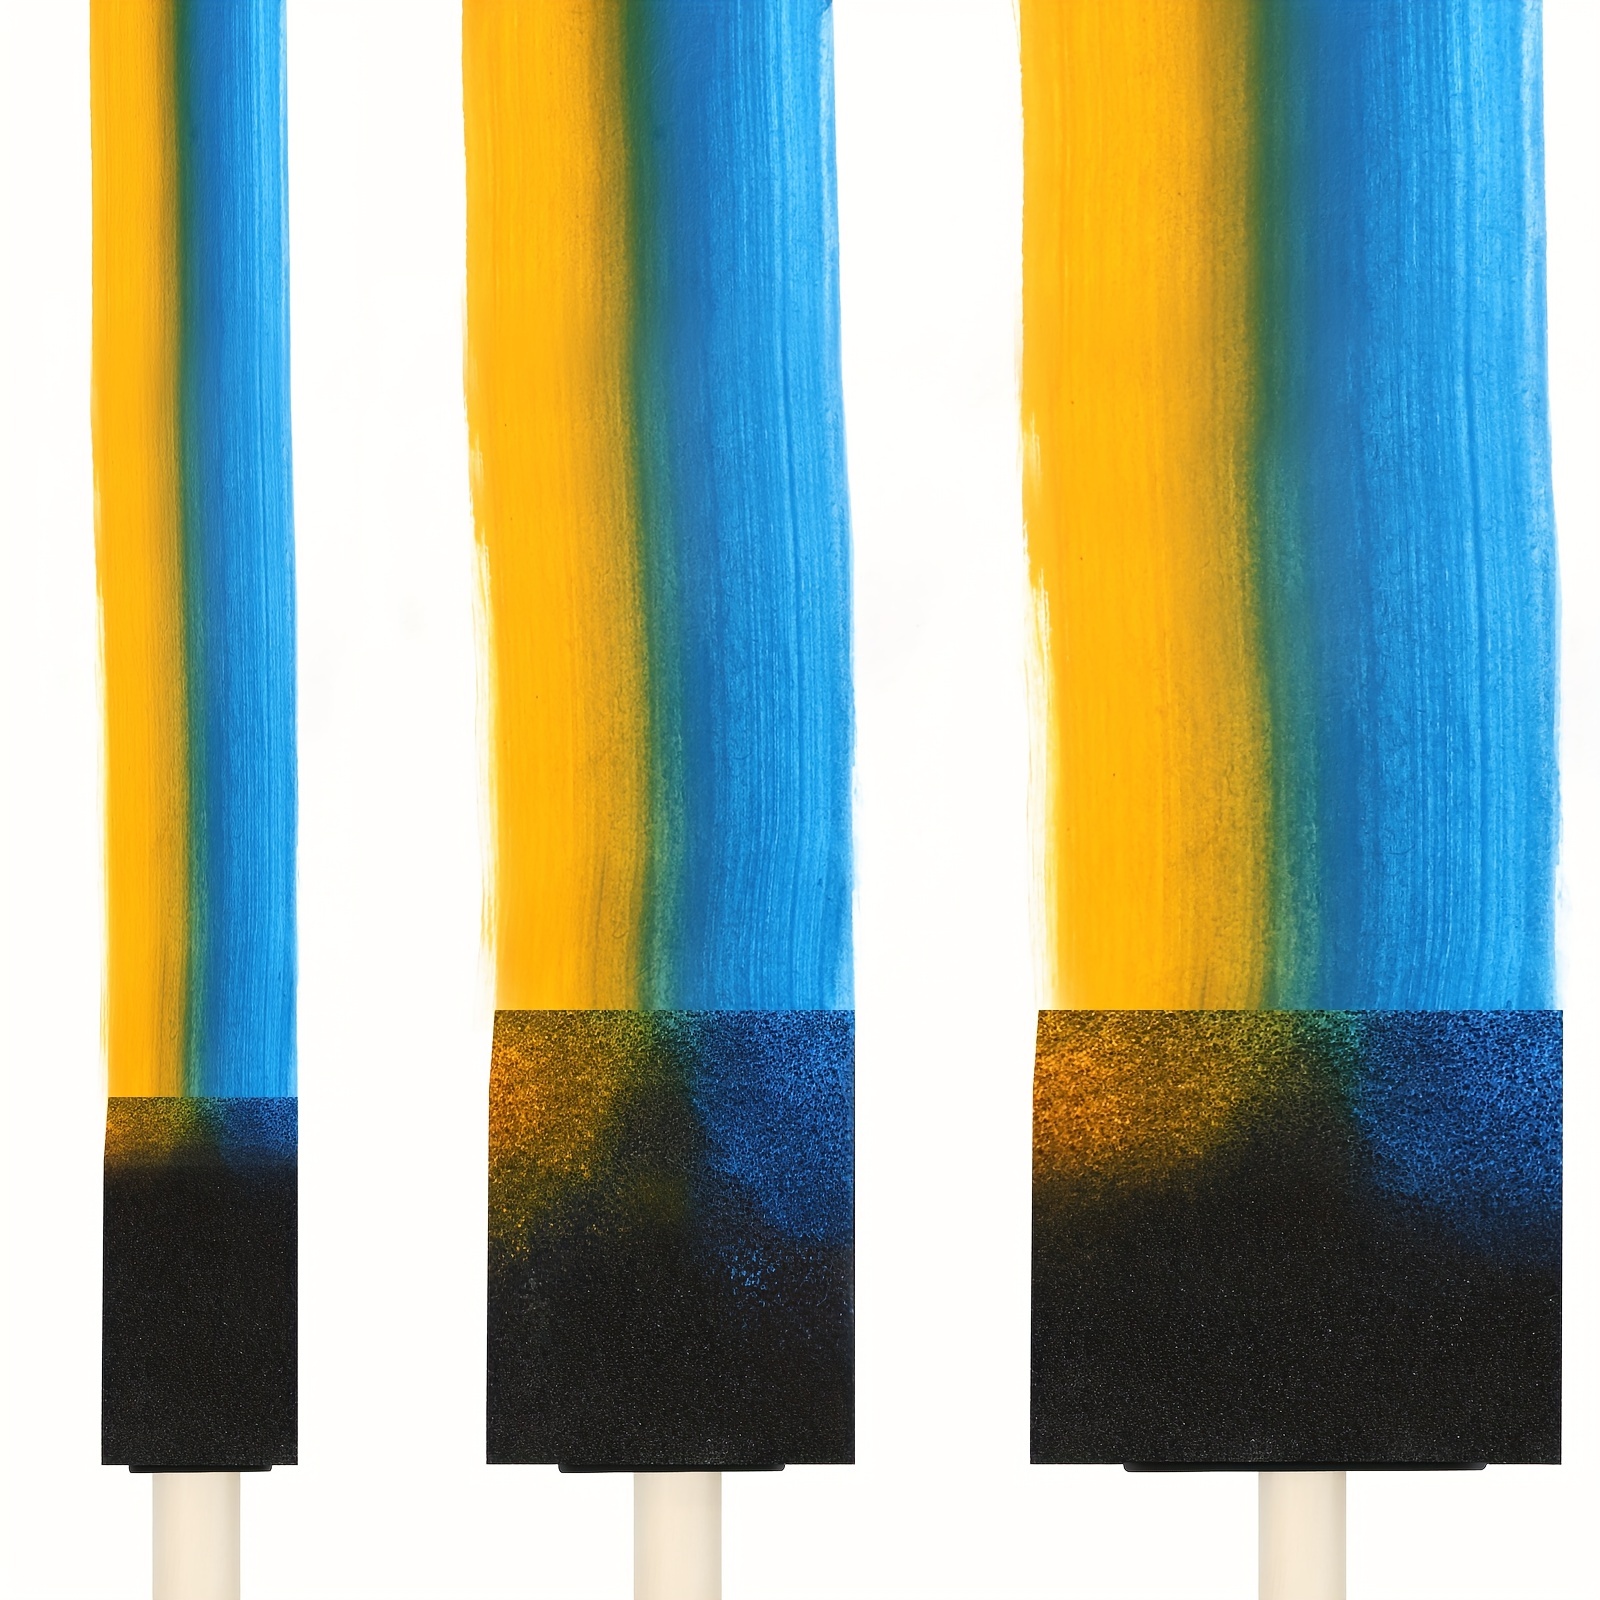  24 Pcs Foam Paint Brushes, Wood Handle Sponge Brushes